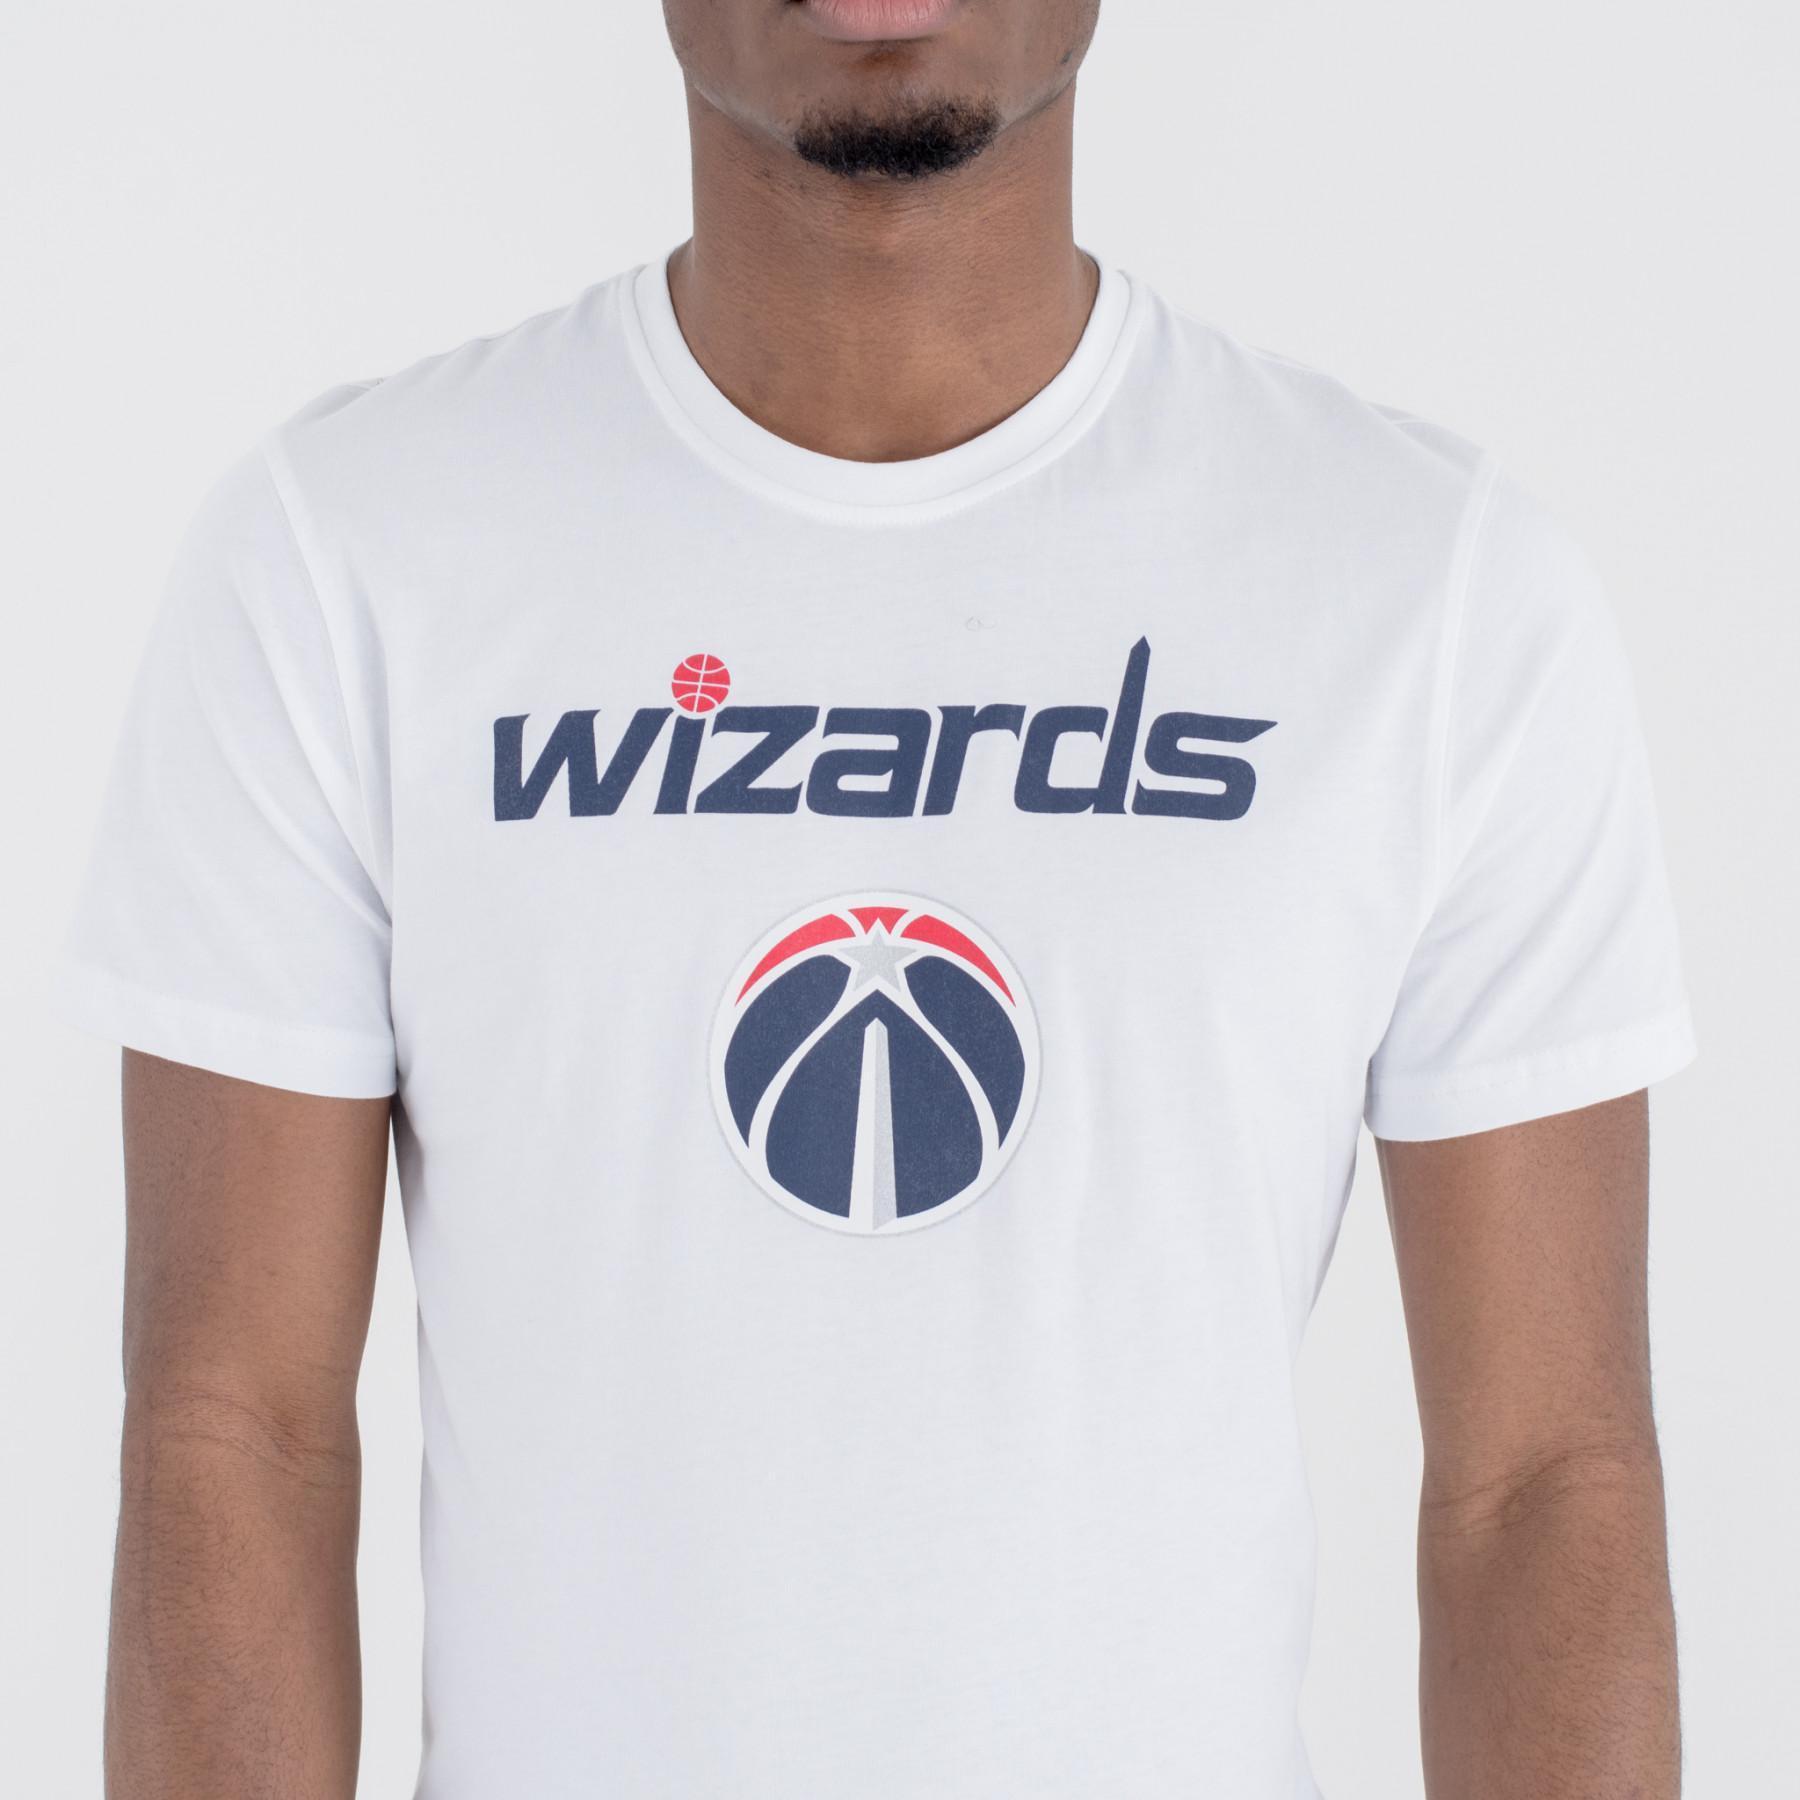  New EraT - s h i r t   logo Washington Wizards